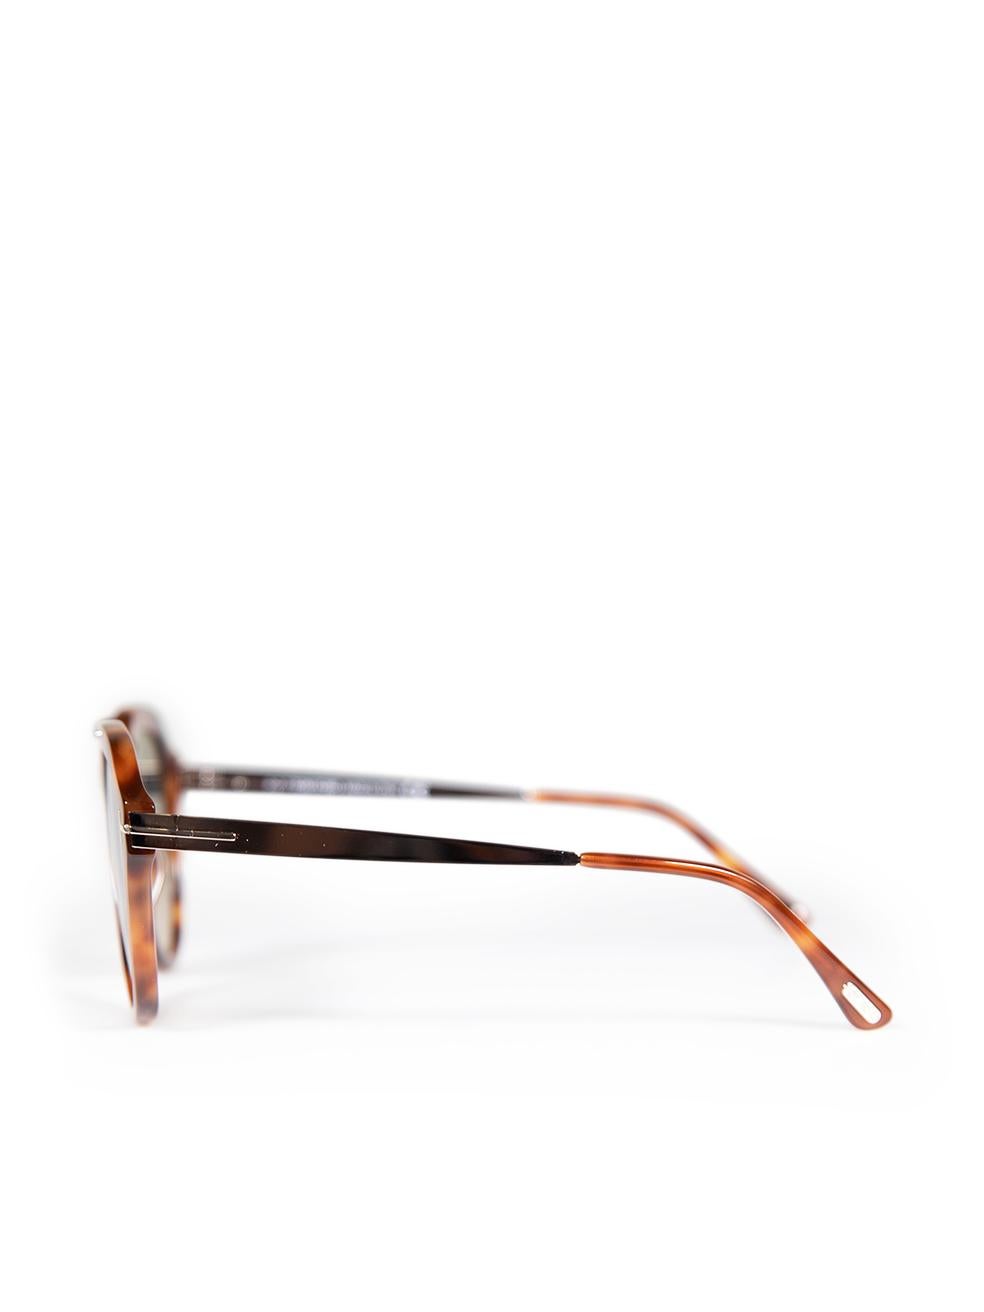 Tom Ford Blonde Havana Lisa Aviator Sunglasses For Sale 1